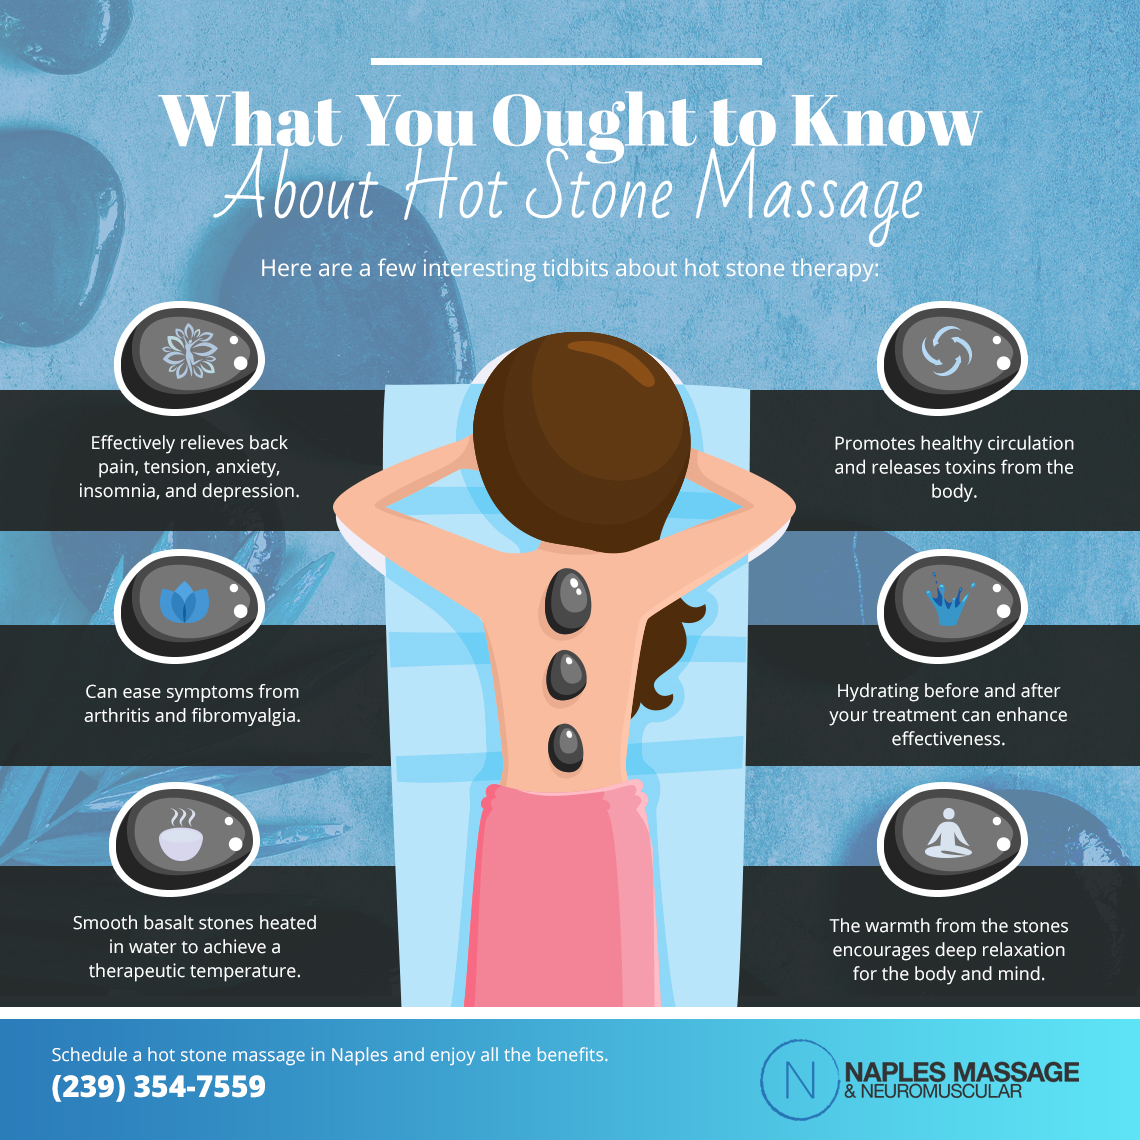 https://drstilldc.com/jQMsBQtIIJTEPbDJYQZVcVseWYbpVsfF/assets/images/optimized/rev-e995ecc/wp-content/uploads/2015/11/health-benefits-of-a-hot-stone-massage-300x199.png